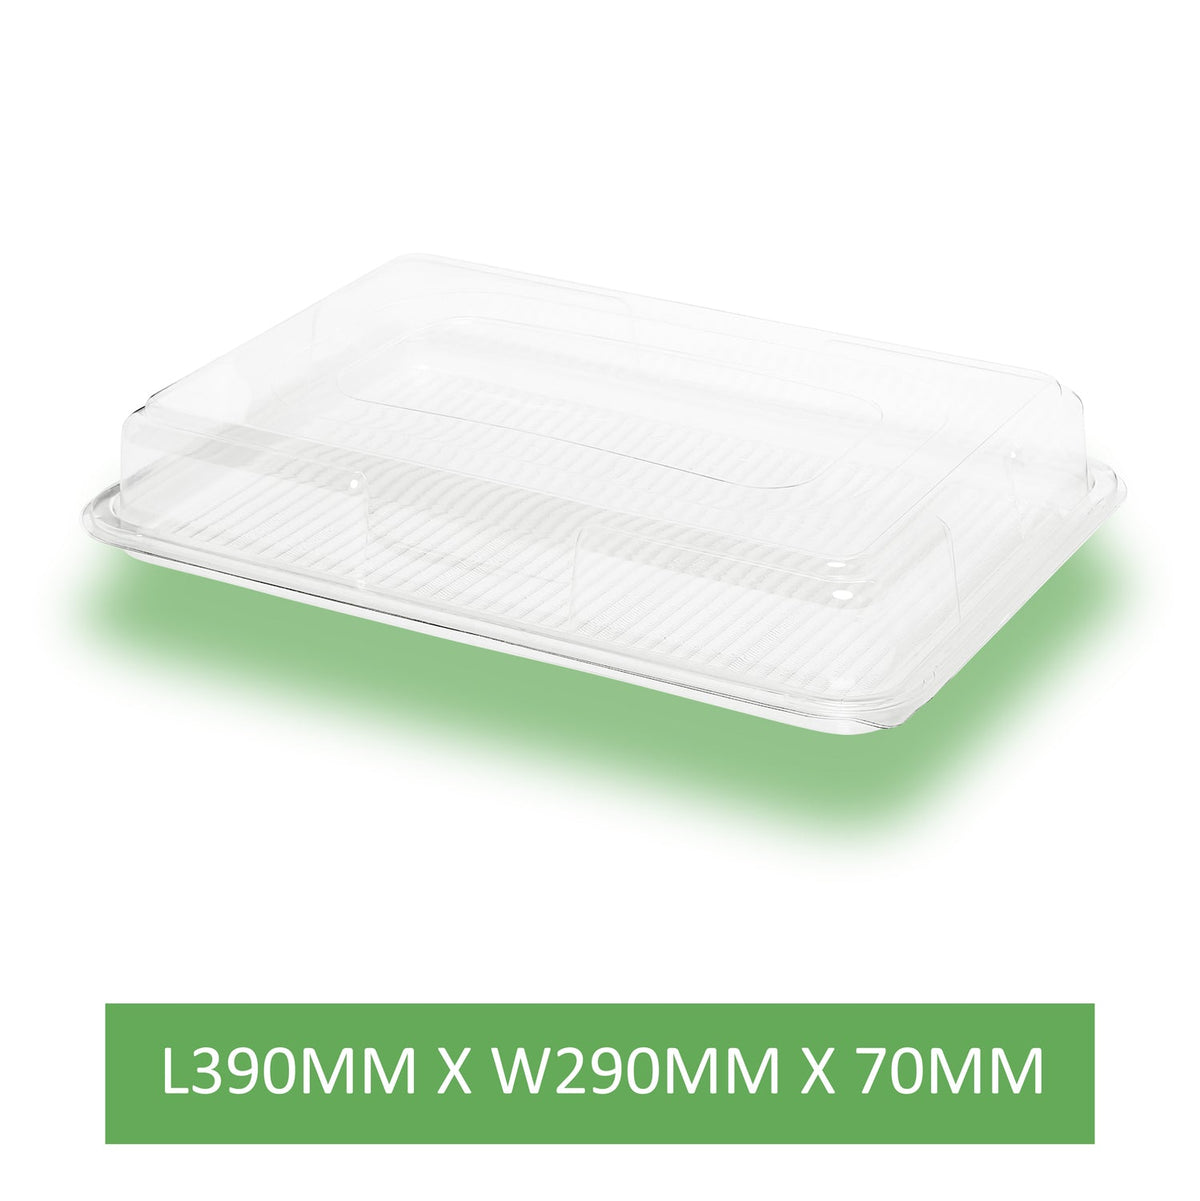 30 x Clear Base Platter & Lids Combi Set (10 Large, 10 Medium, 10 Small)